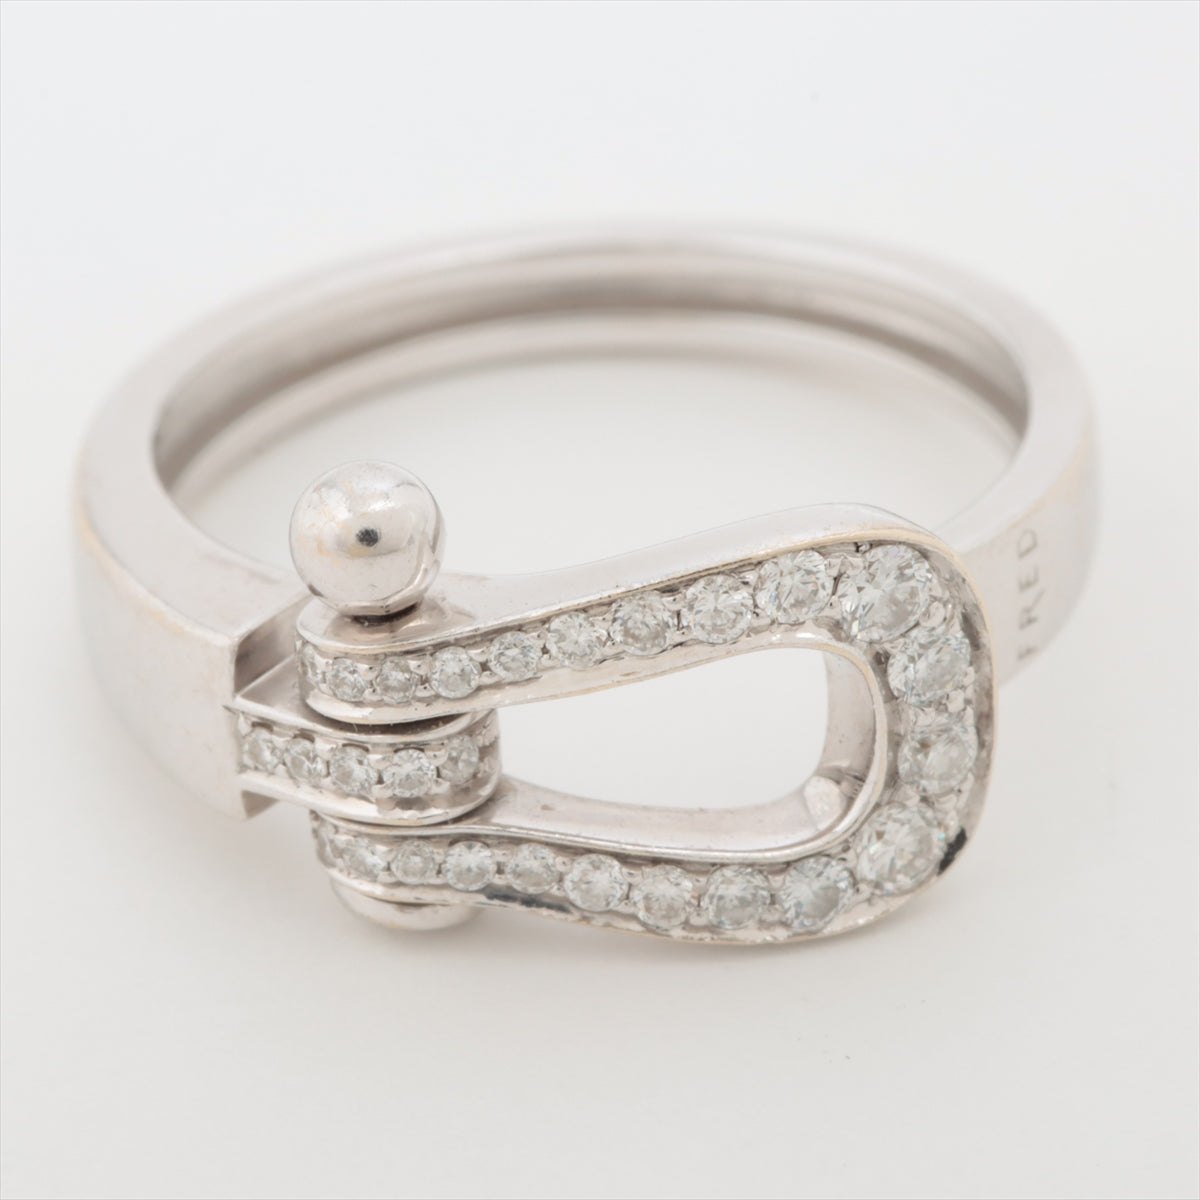 Fred Force 10 Medium diamond Ring 750(WG) 3.4g 48